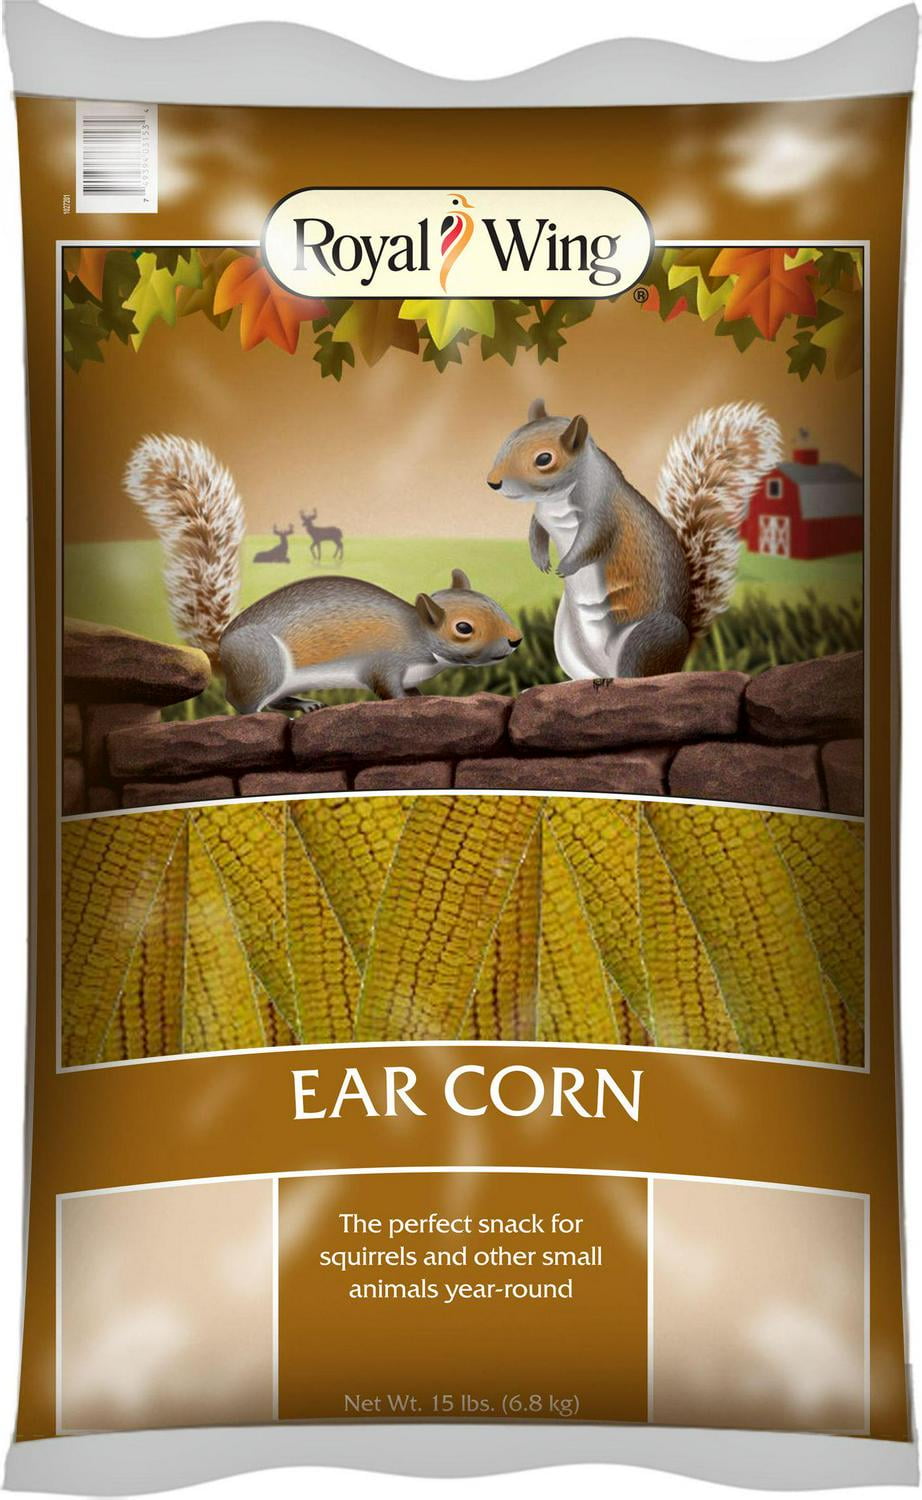 Iowa Grown Ear Corn for Squirrels Deer Birds Crafts 18 Large Ears 9-10 lbs. 